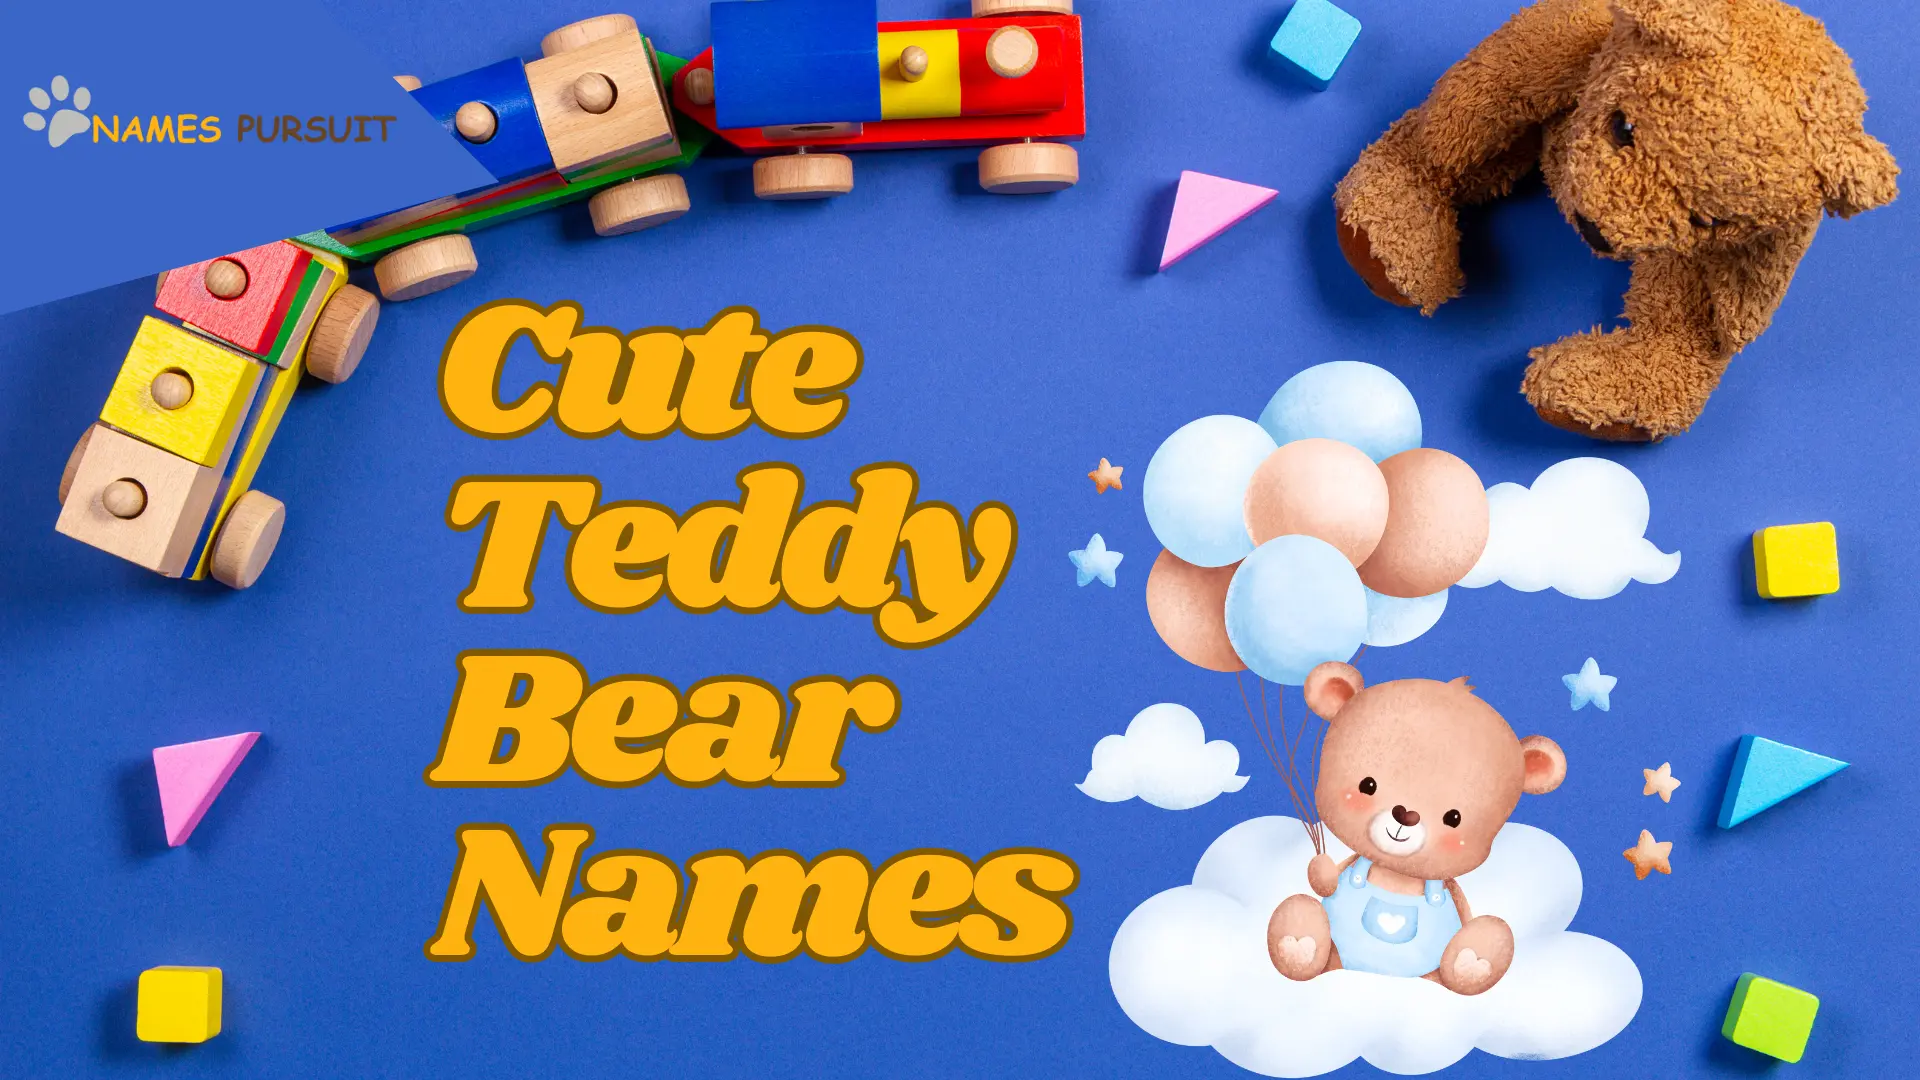 Cute Teddy Bear Names